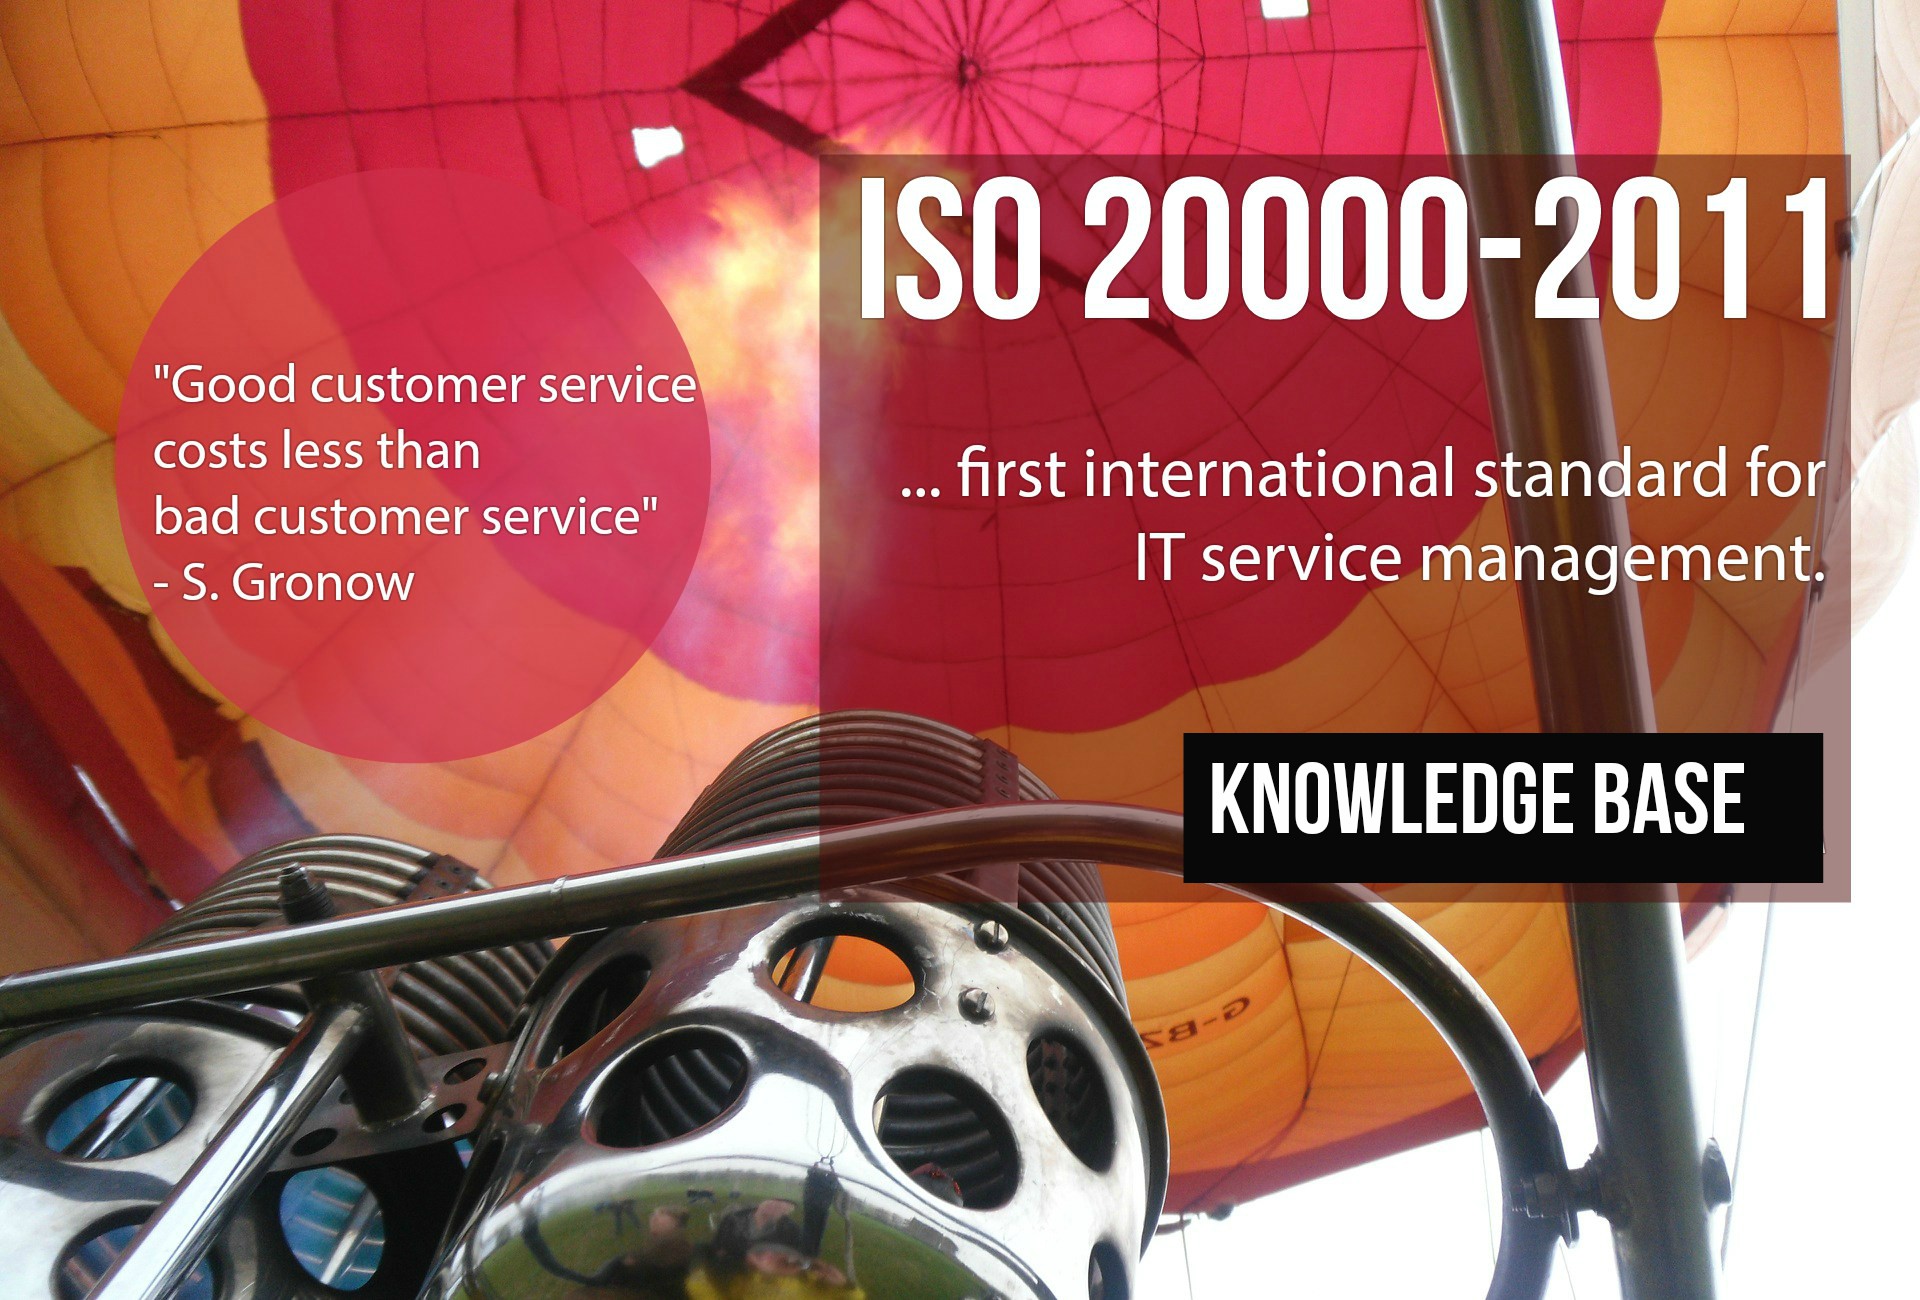 ITS Partner - Baza znanja - ISO 20000 Consulting